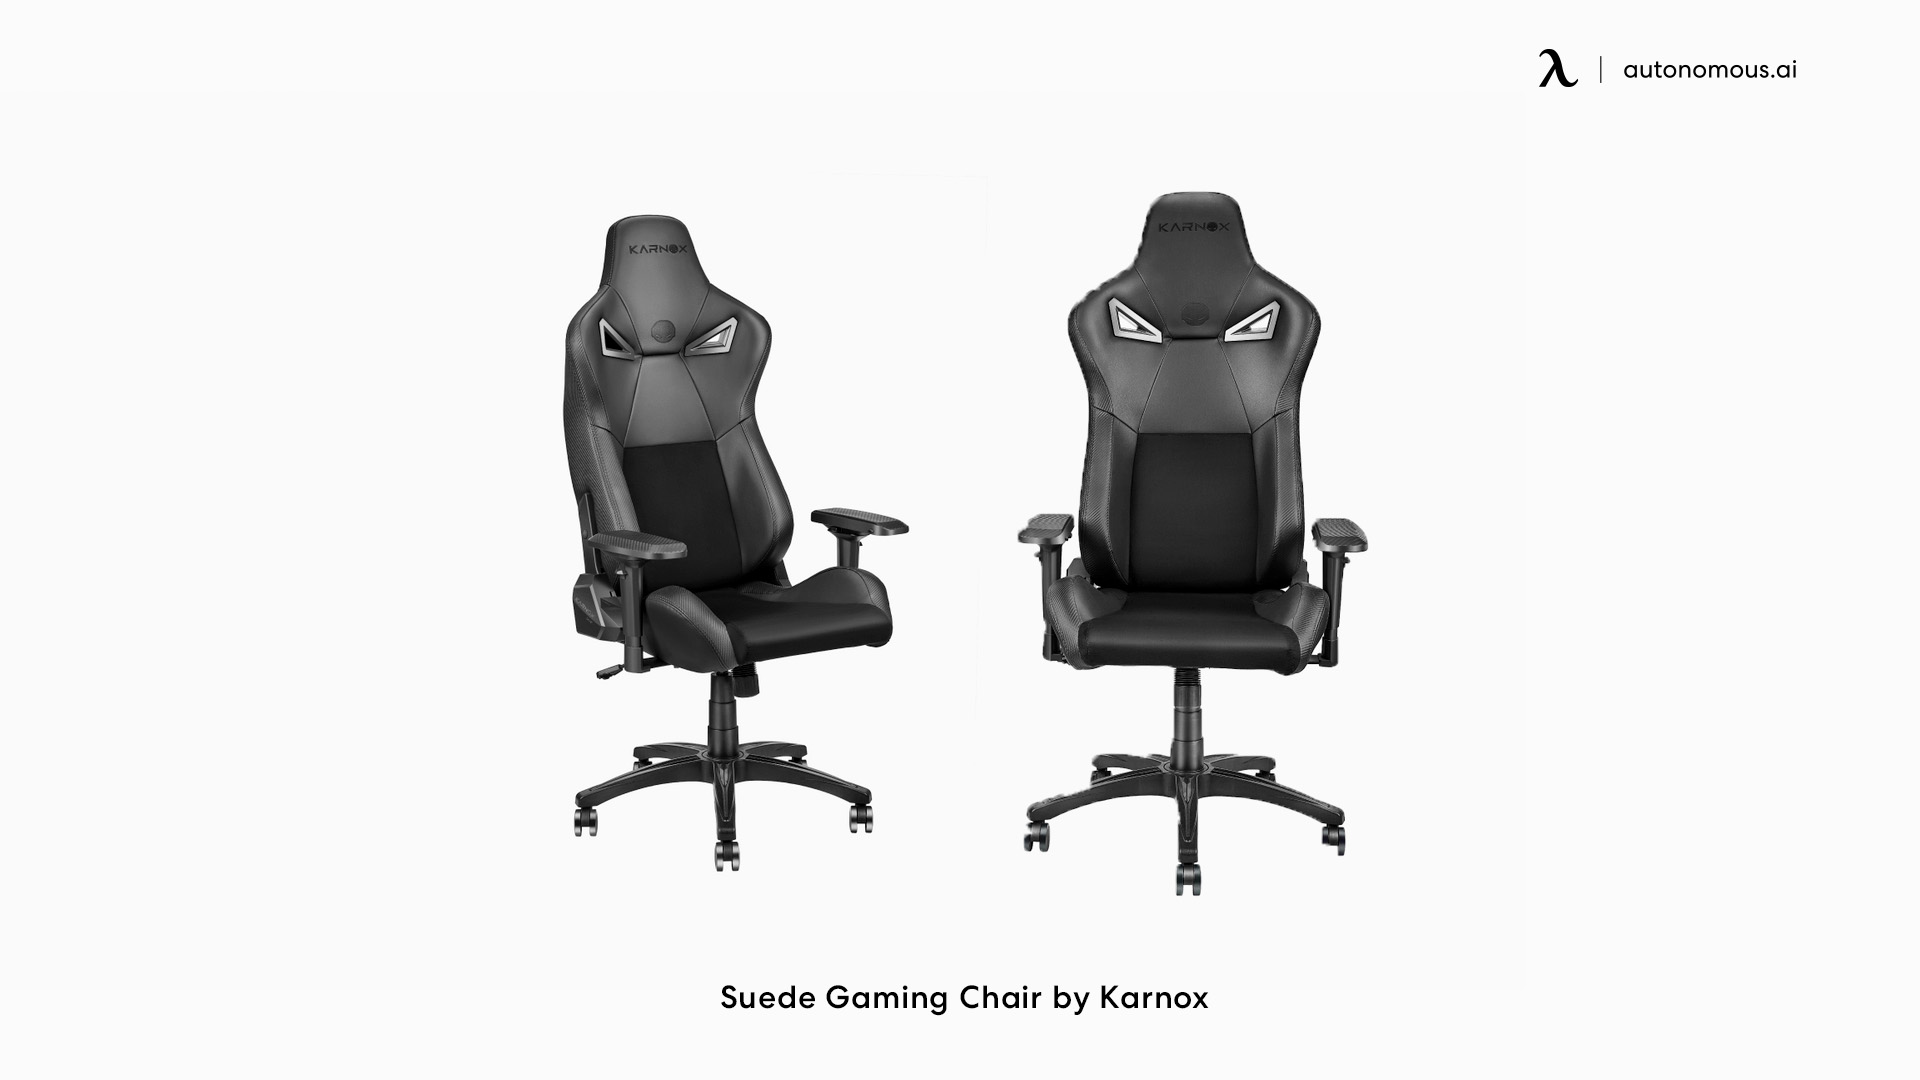 Karnox Suede gaming chair under $400